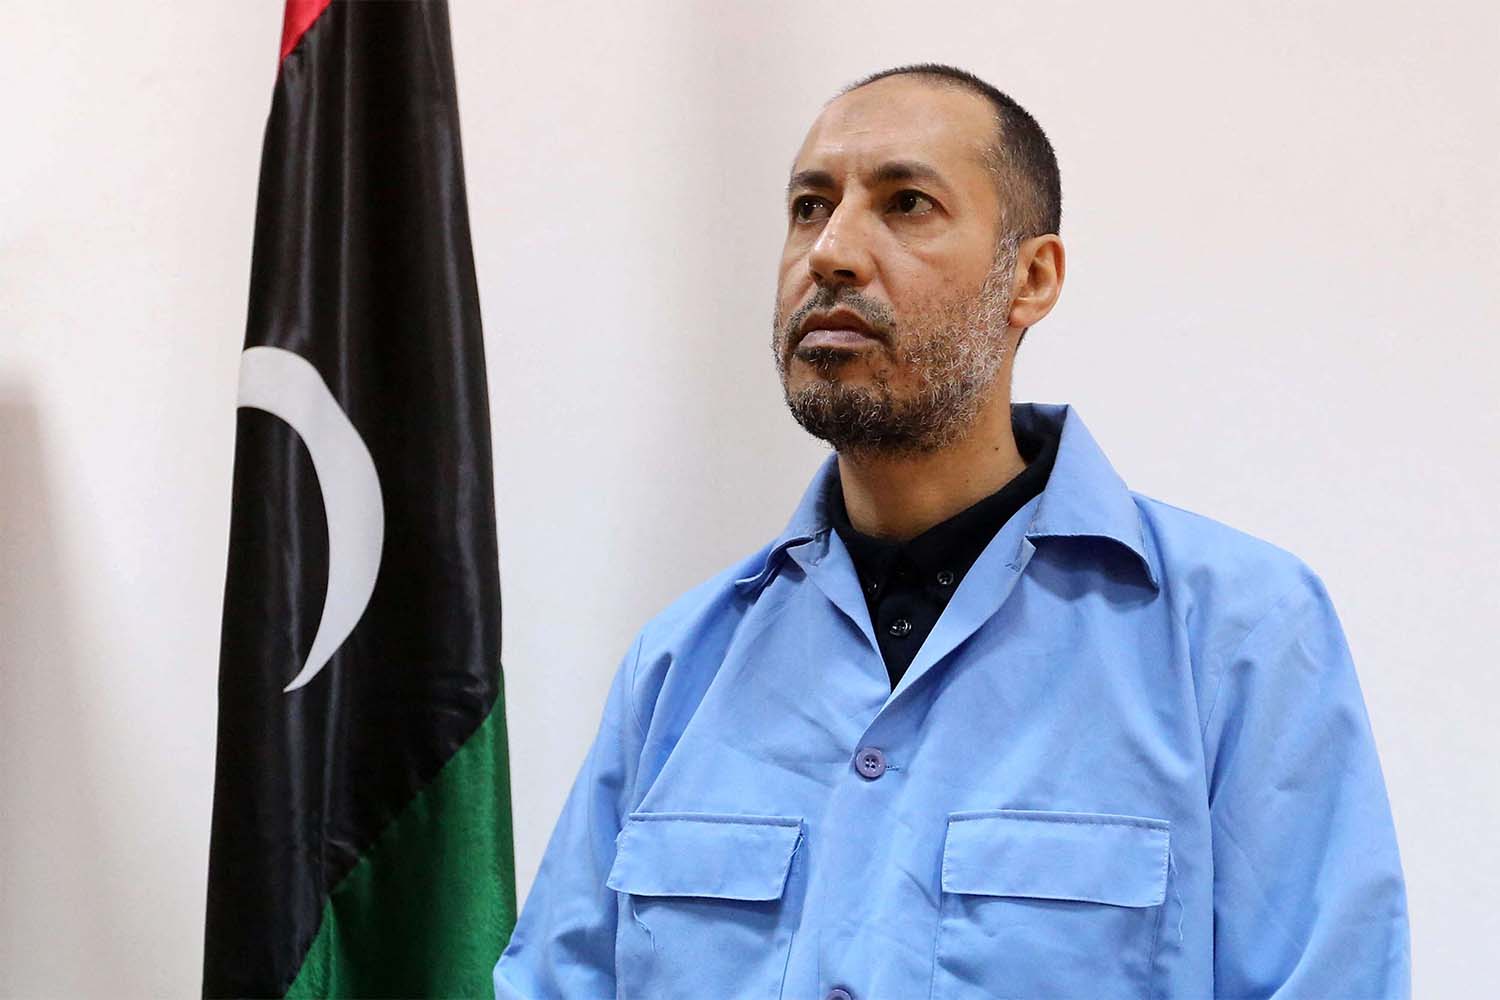 Al-Saadi Gadhafi travelled to Turkey straight after his release